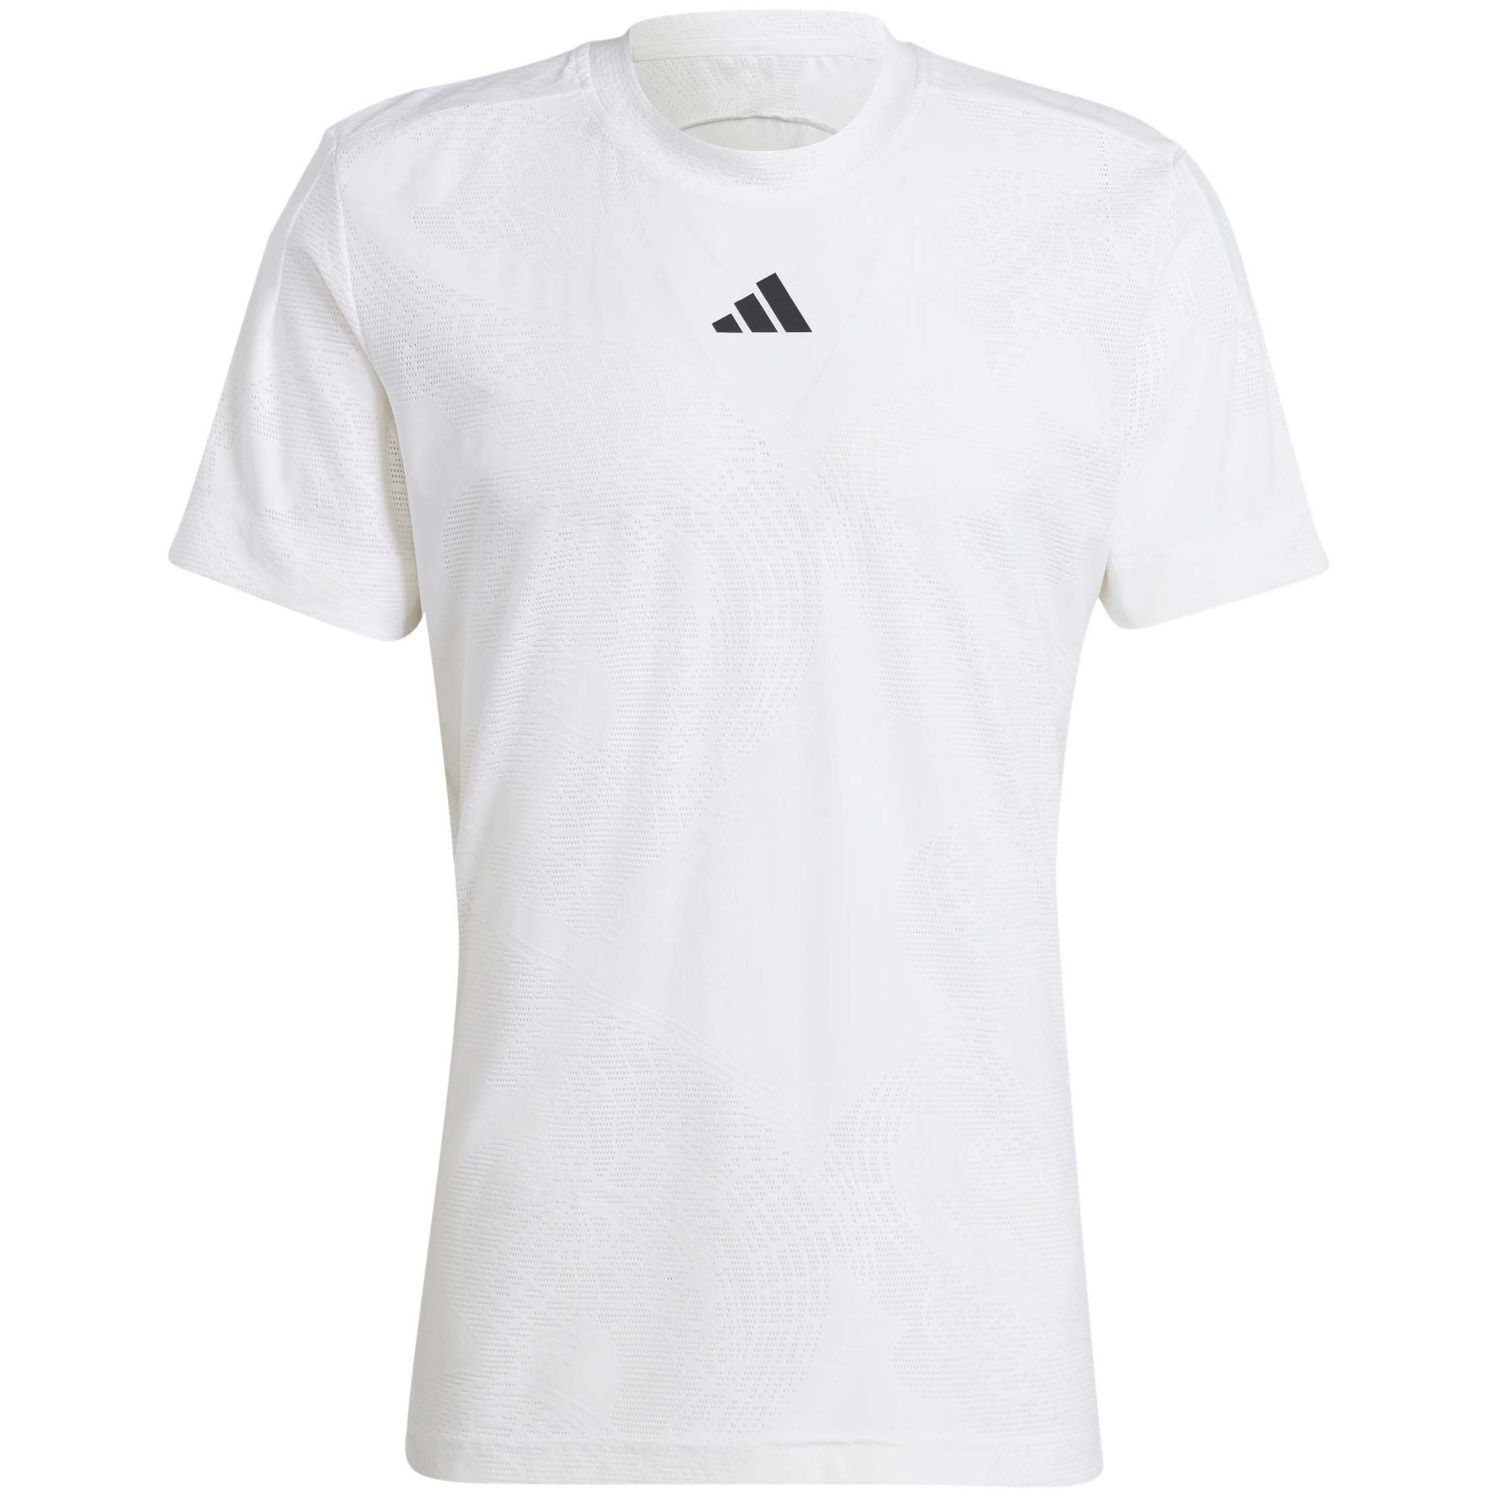 Camiseta adidas London - blanco - 